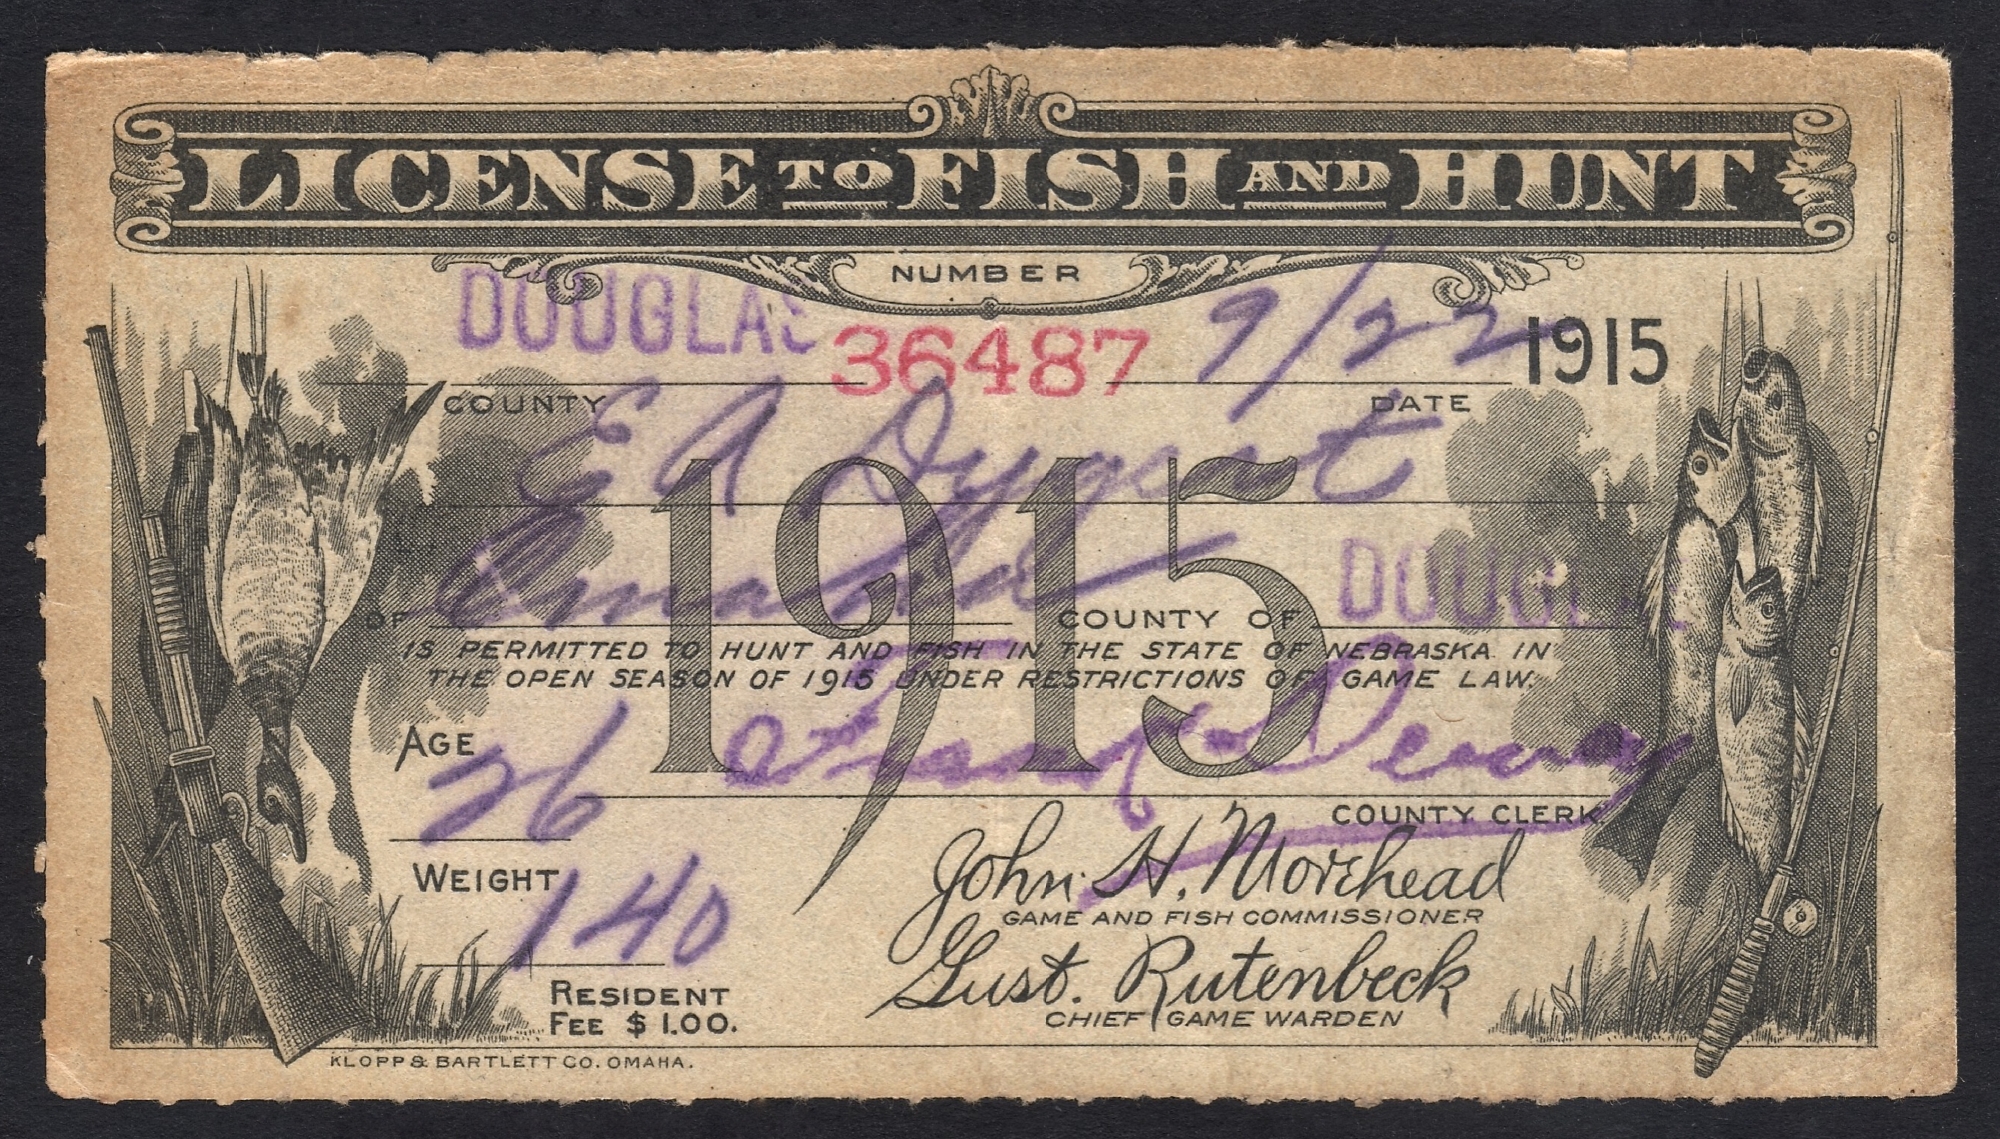 Nebraska 1915 License to Fish and Hunt